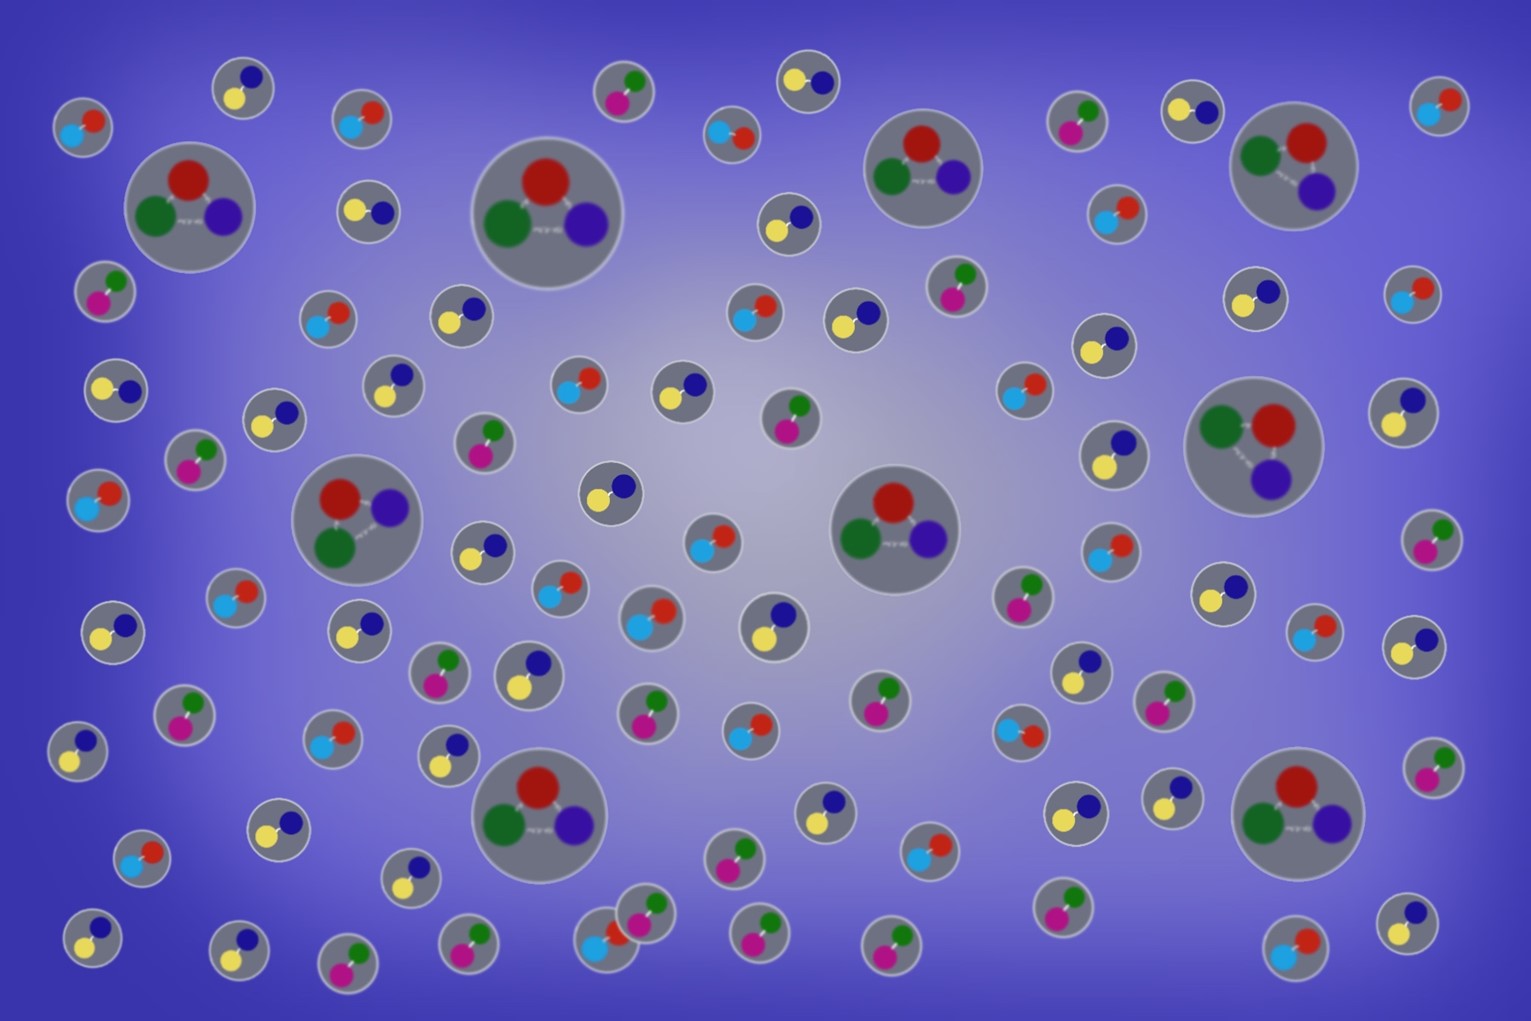 A cartoon of free-streaming hadrons emerging from quark-gluon plasma.